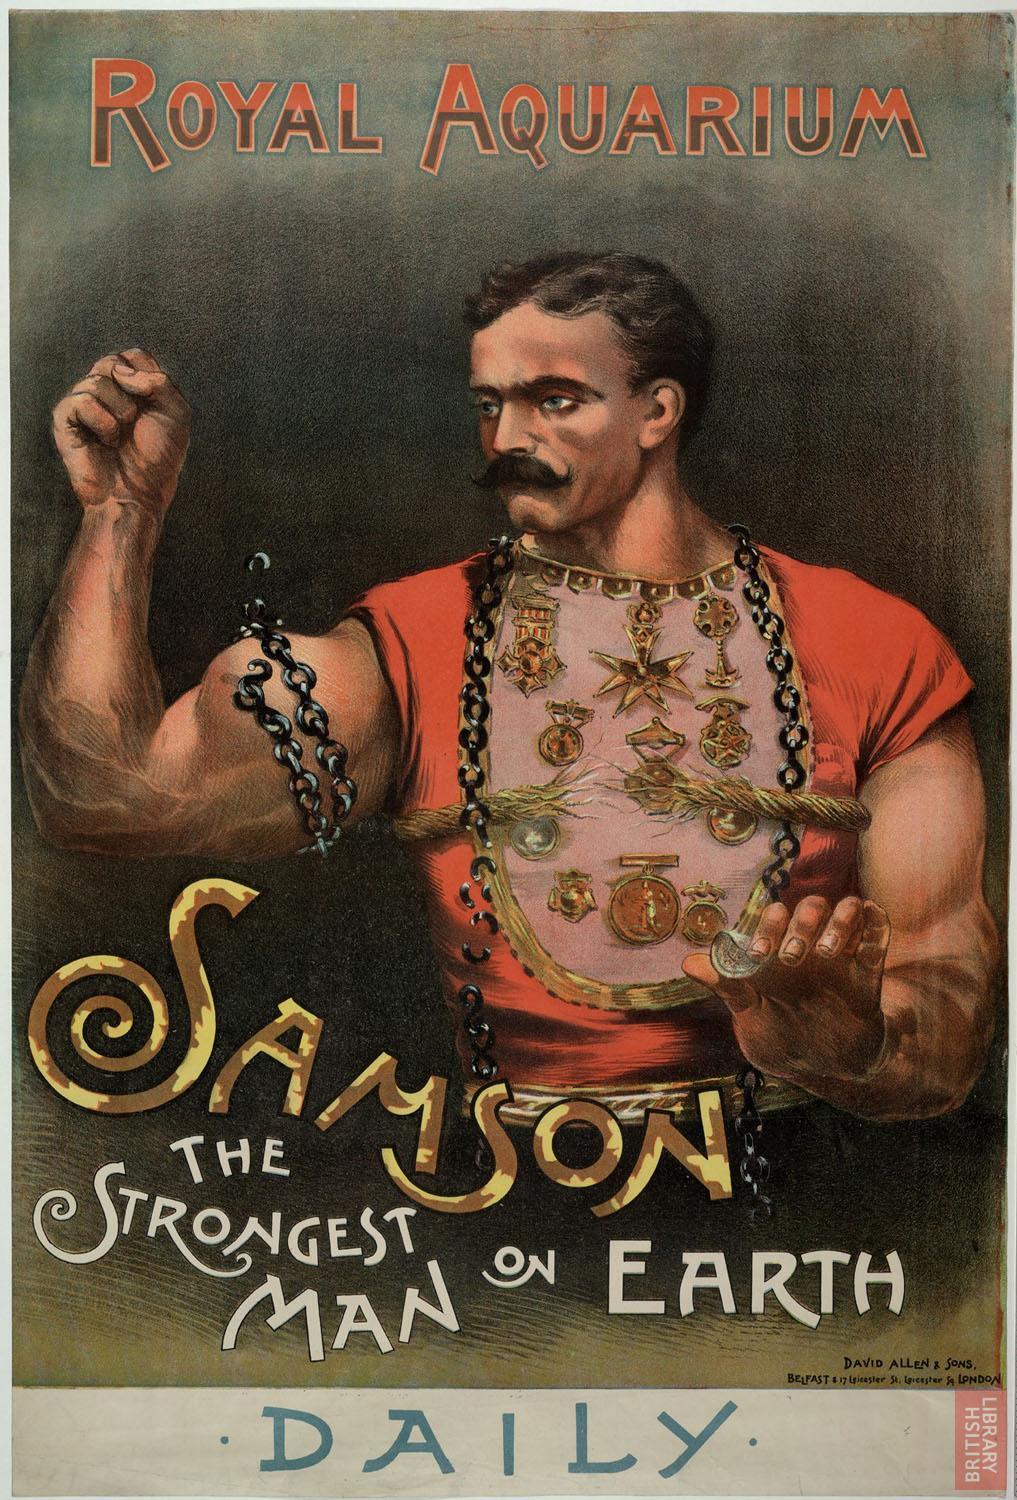 affiche Royal Aquarium: "Samson - the strongest man on earth" (1889)